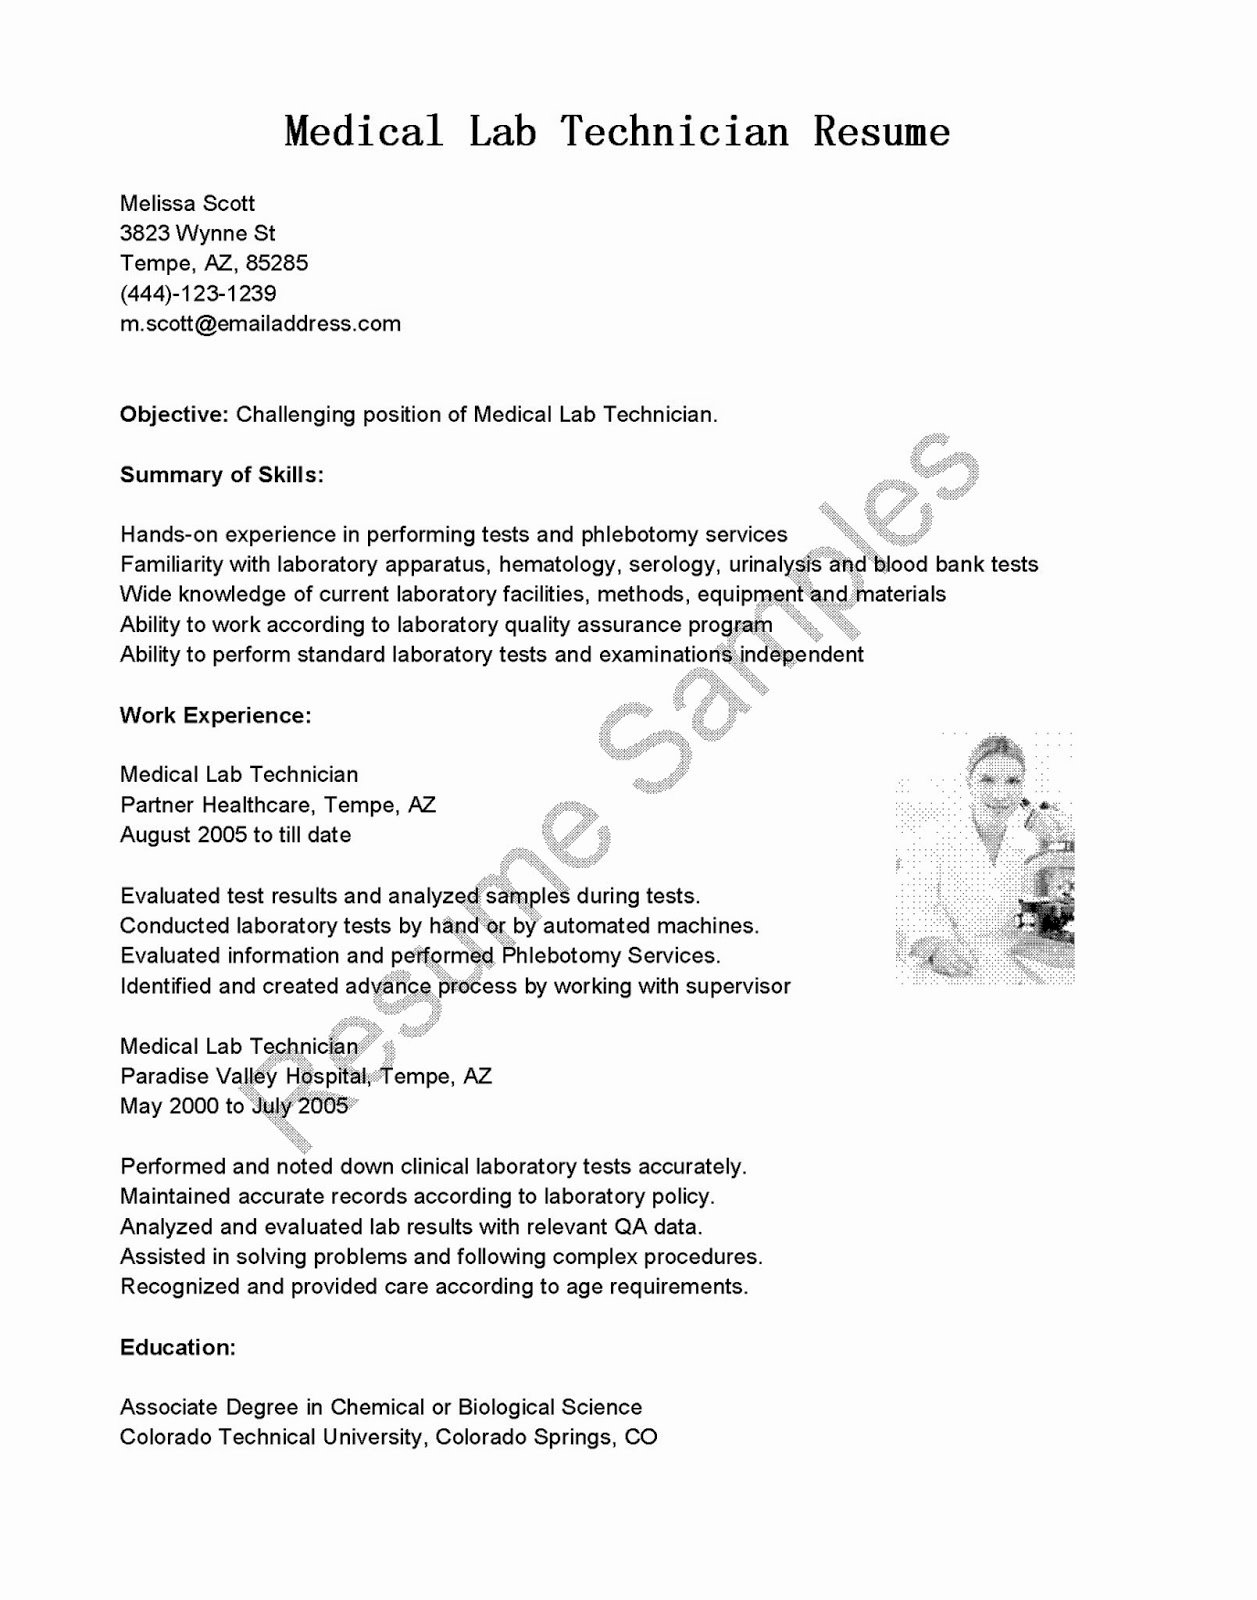 Resume Samples Medical Lab Technician Resume Sample